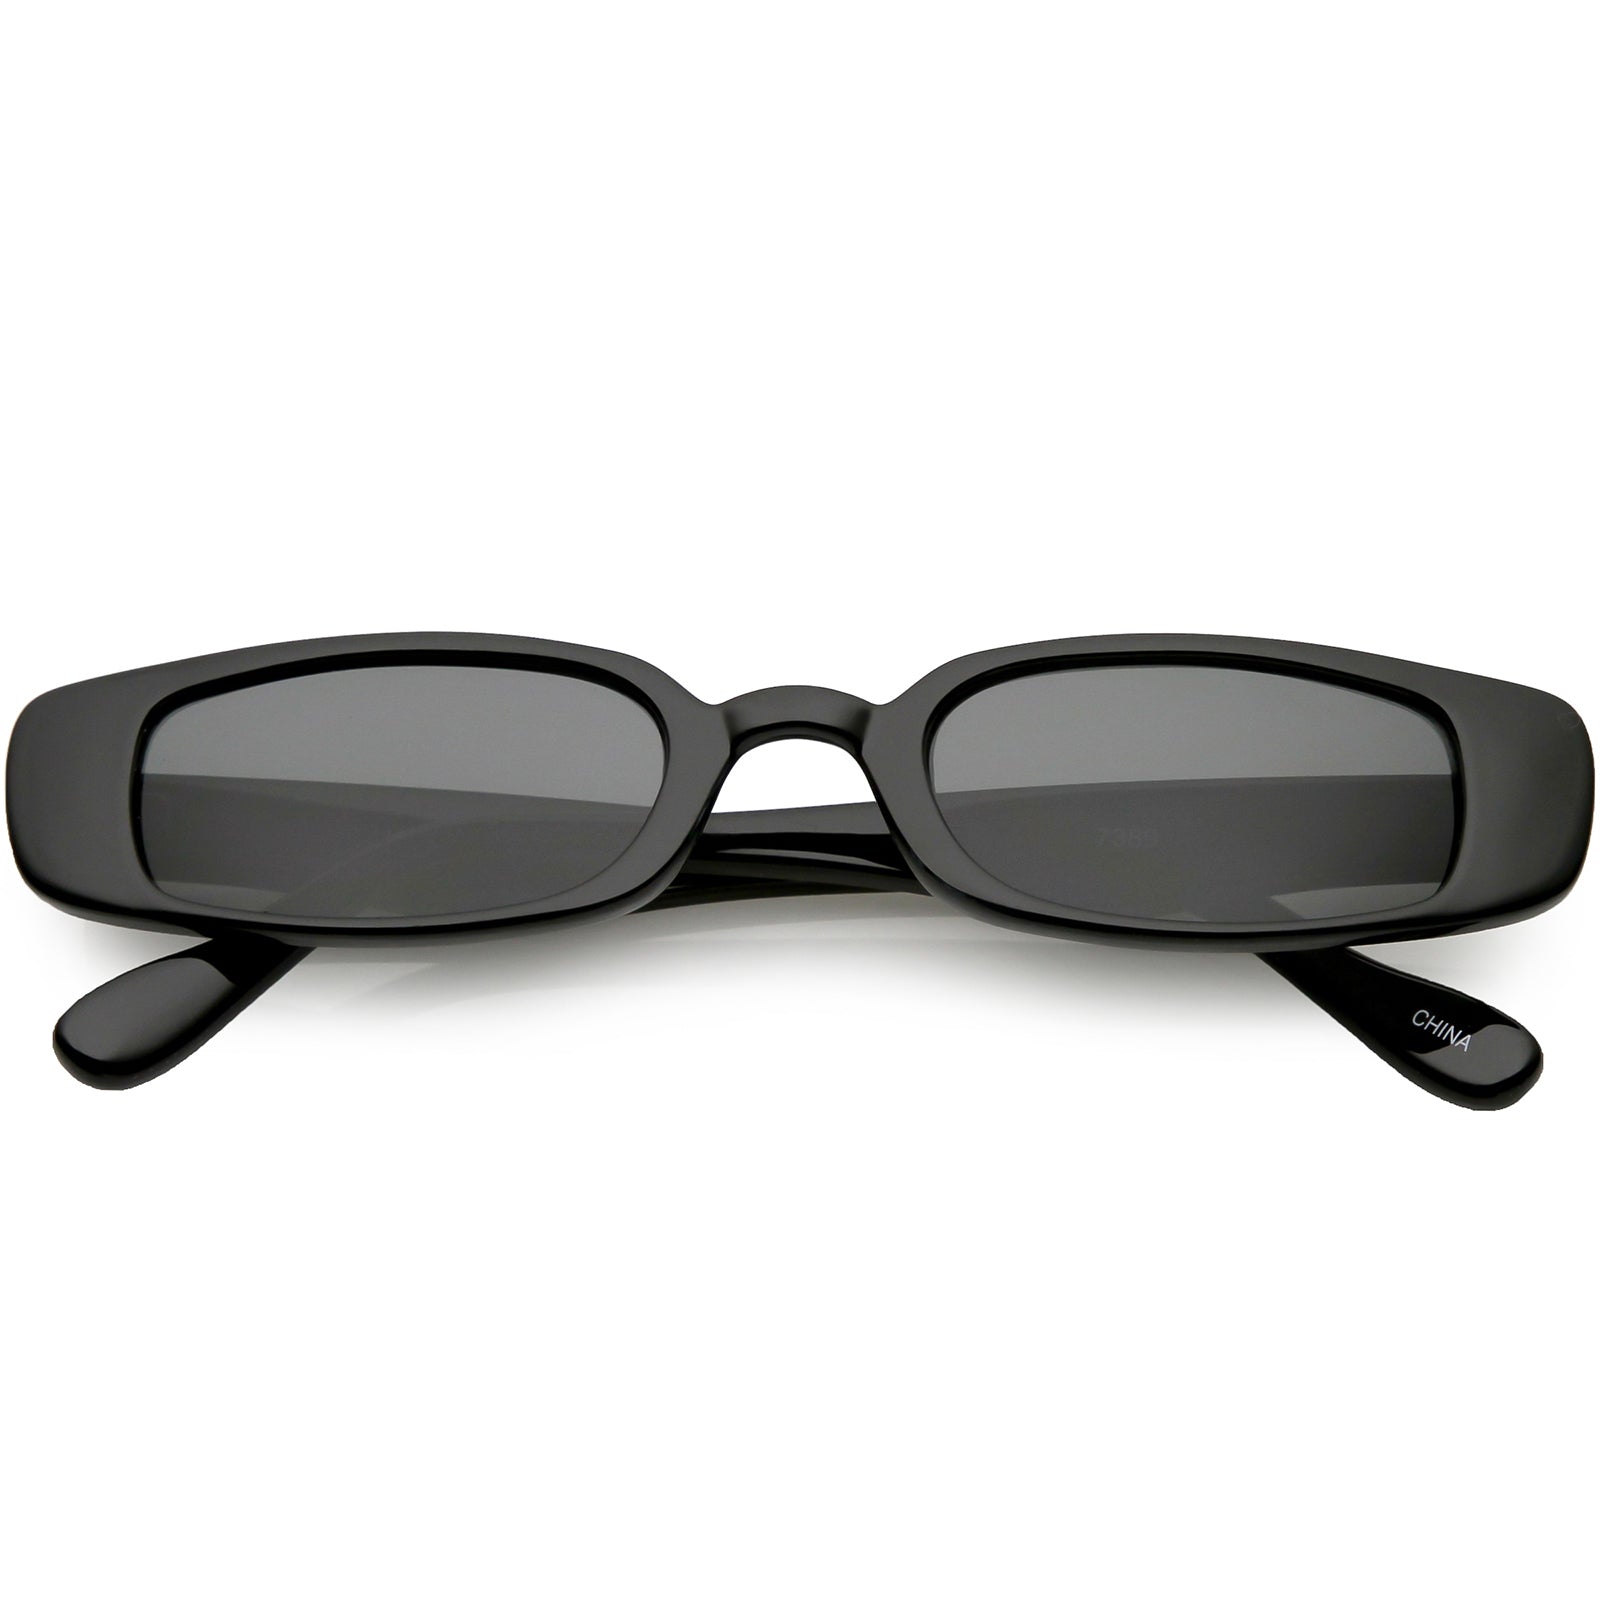 Extreme Thin Small Rectangle Sunglasses Neutral Colored Lens 49mm - sunglass .la